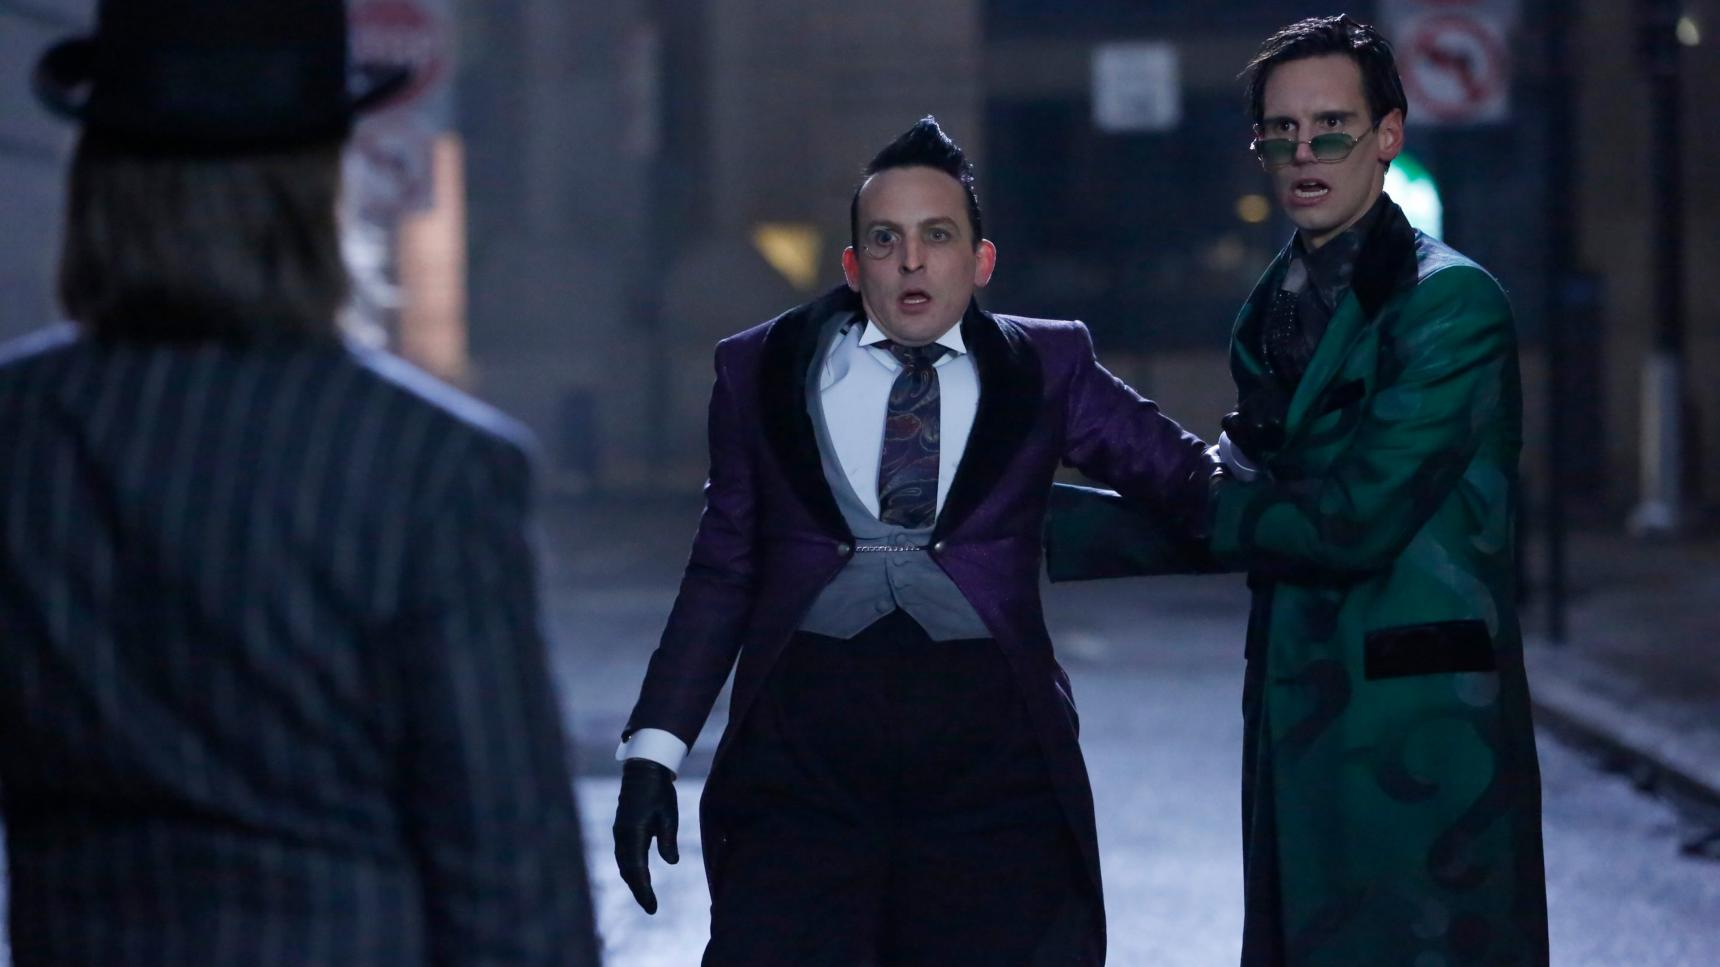 Poster del episodio 12 de Gotham online